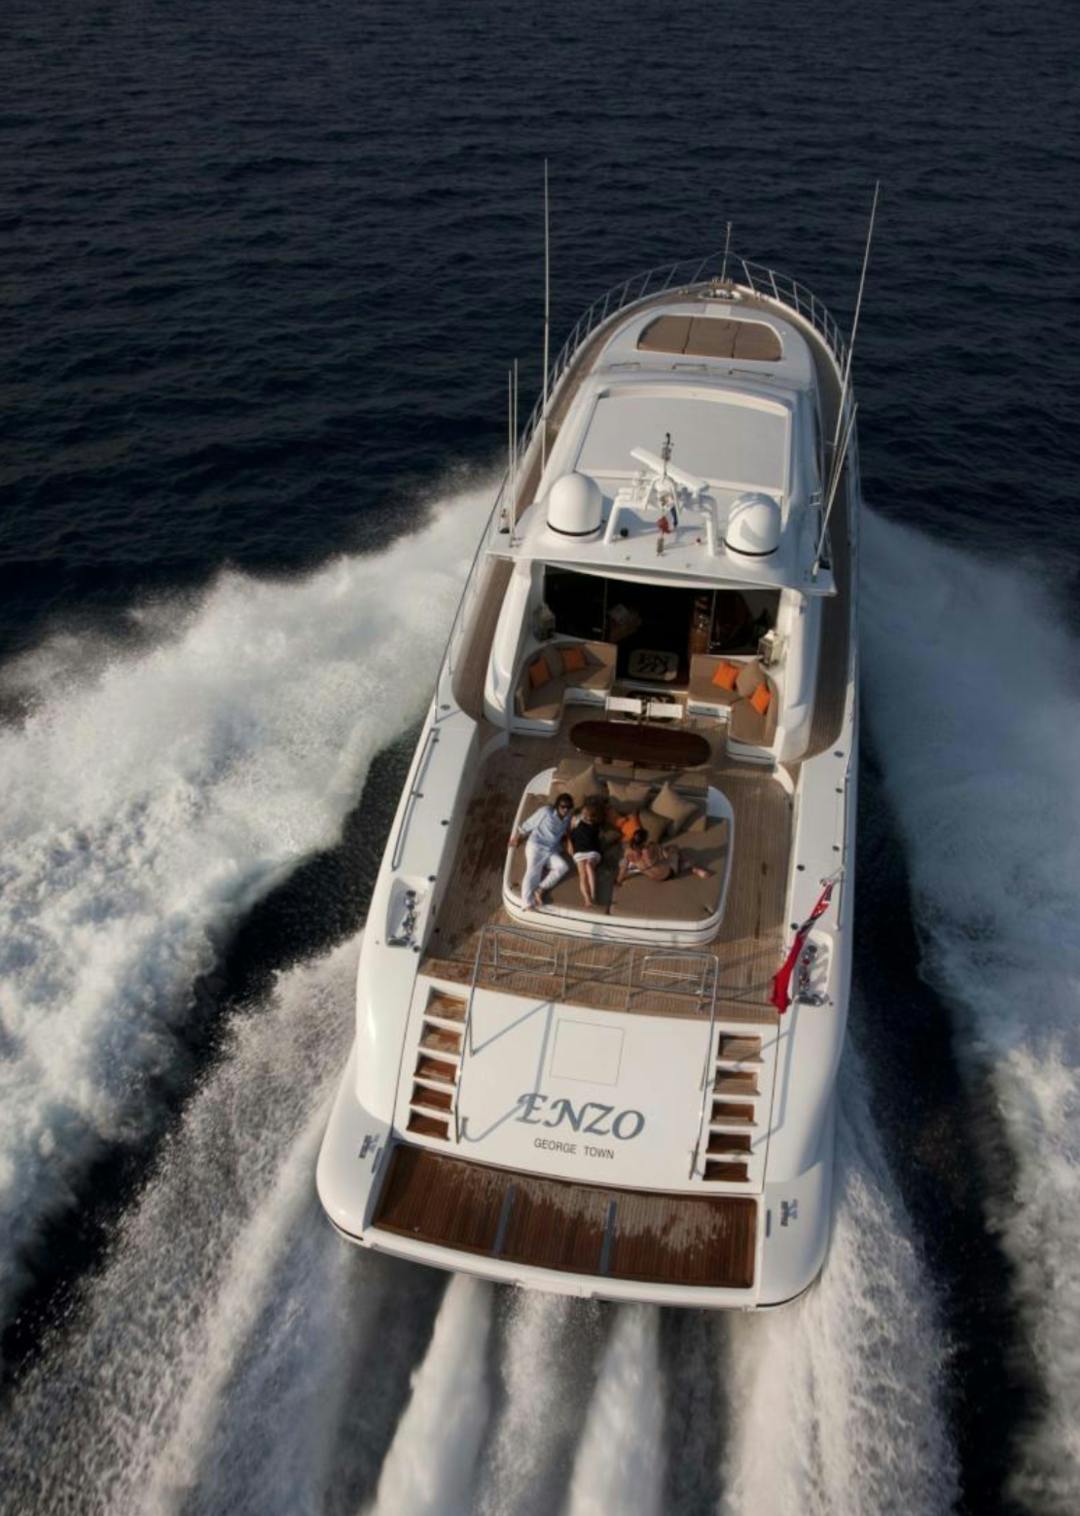 92 Mangusta luxury charter yacht - Cannes, France